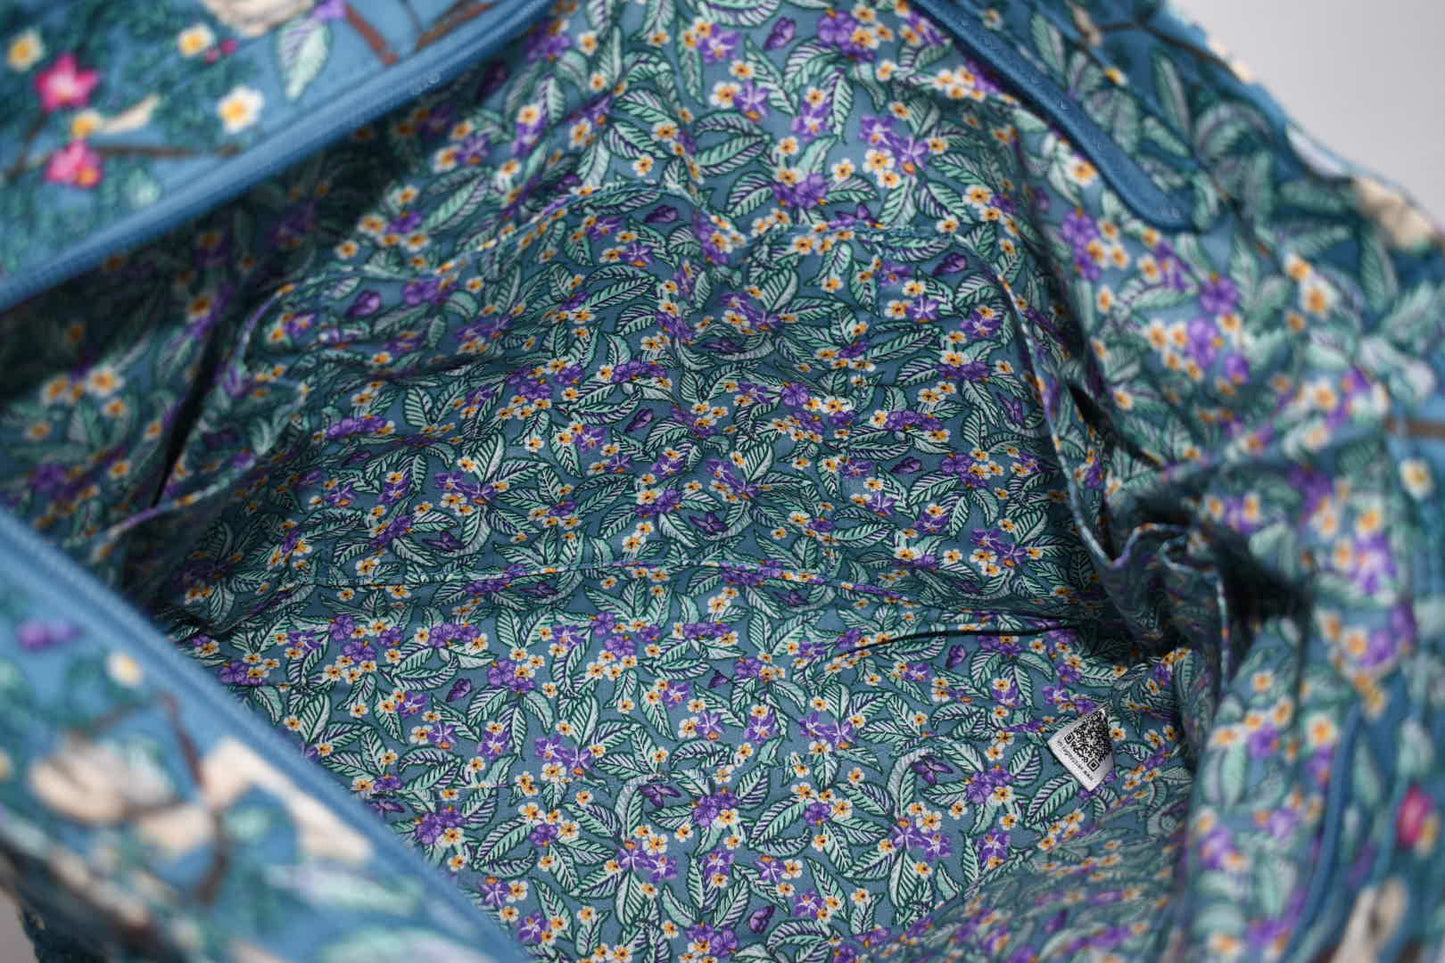 Vera Bradley Small Vera Tote Bag in "Hanging Around" Pattern